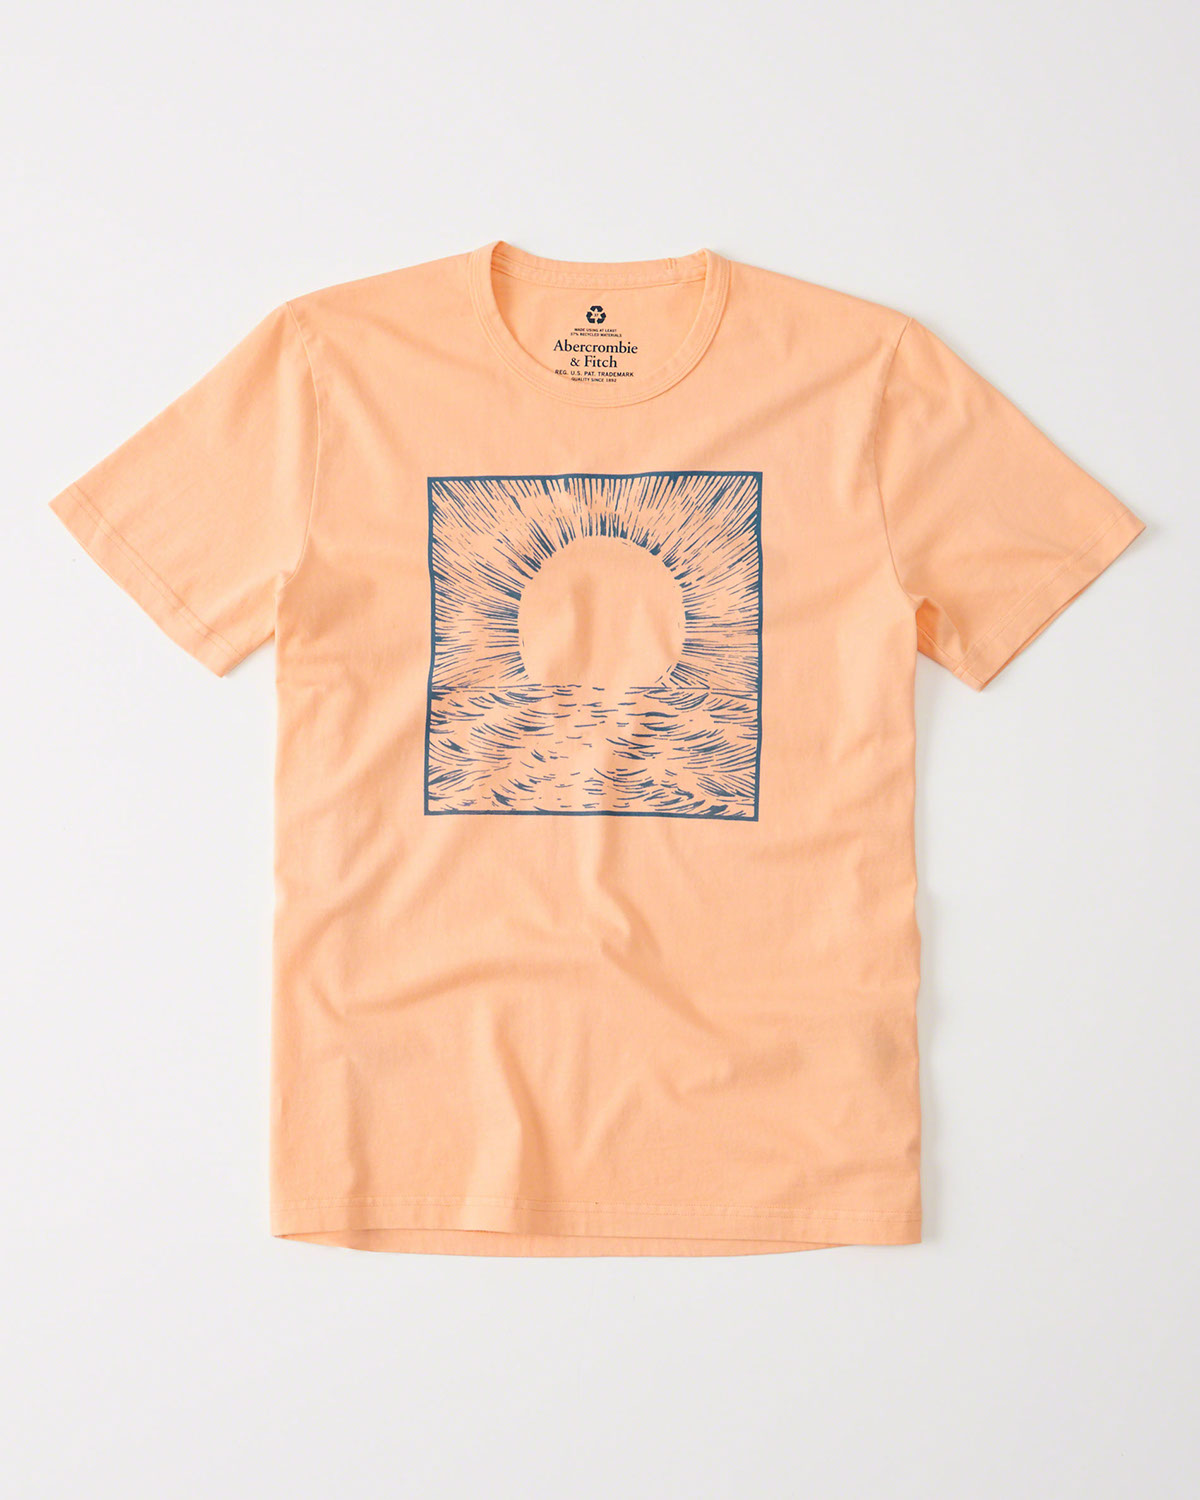 abercrombie Abercrombie & Fitch t-shirt graphic desing ILLUSTRATION  design